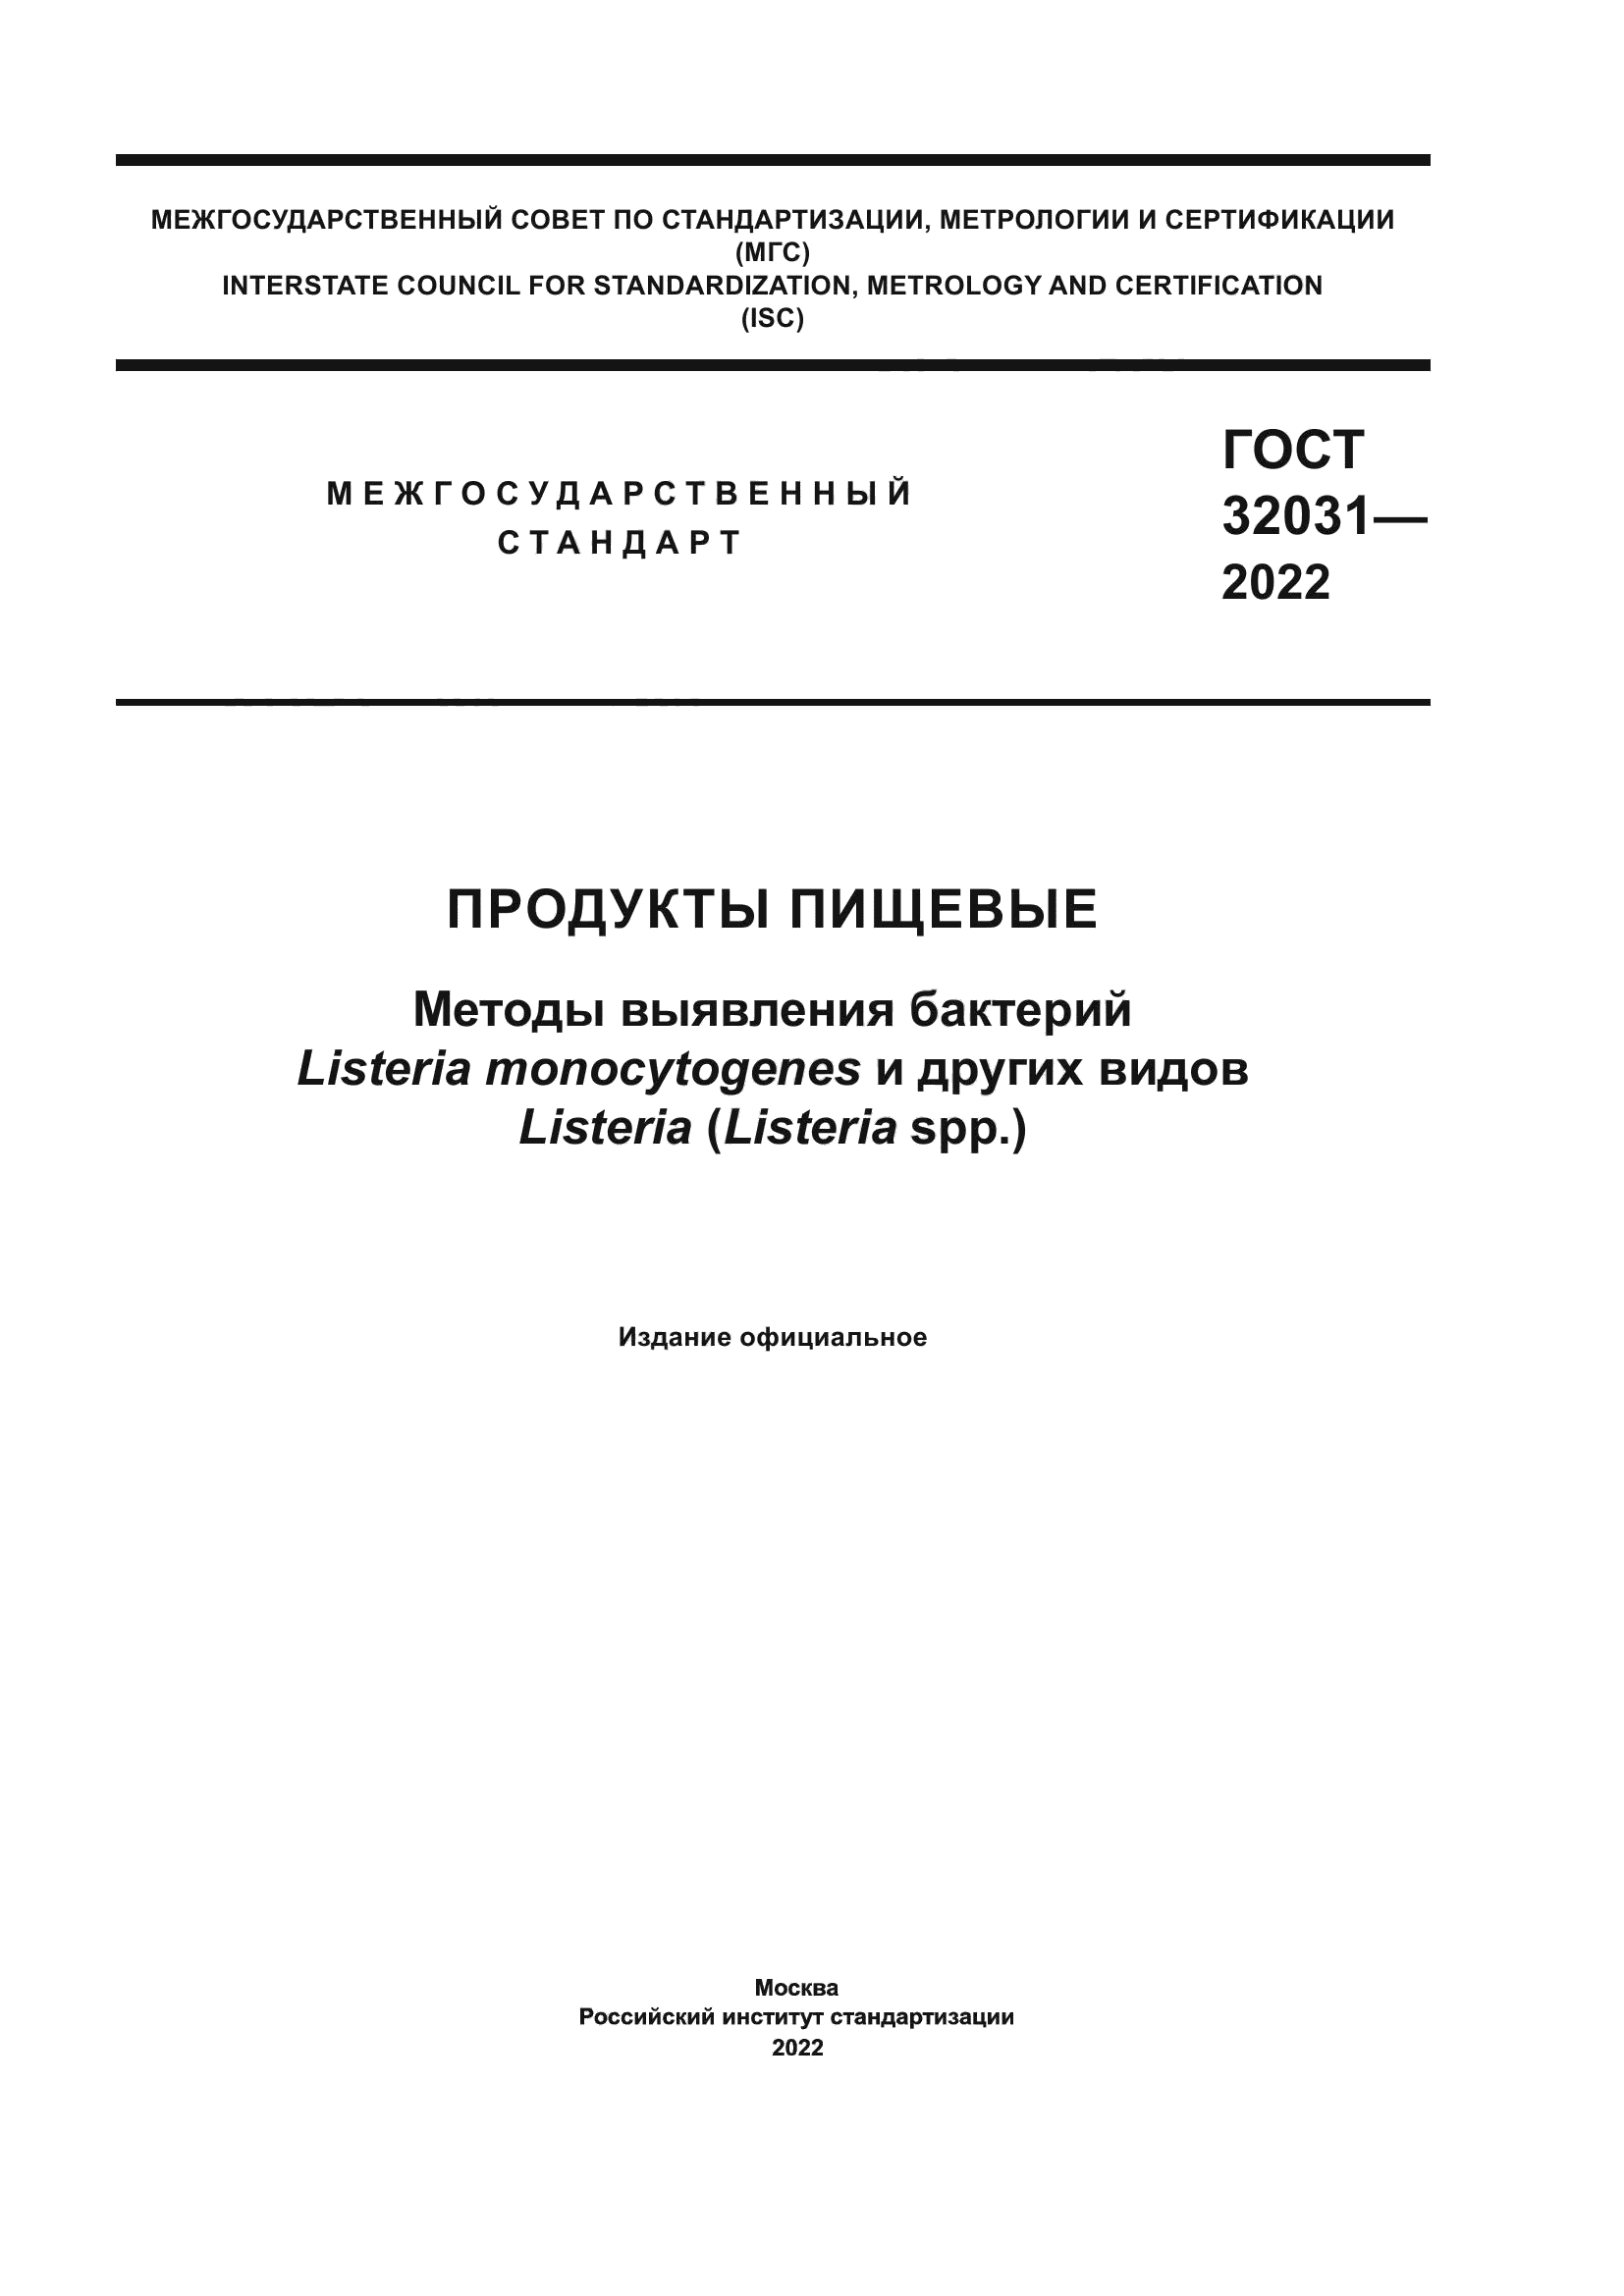 ГОСТ 32031-2022